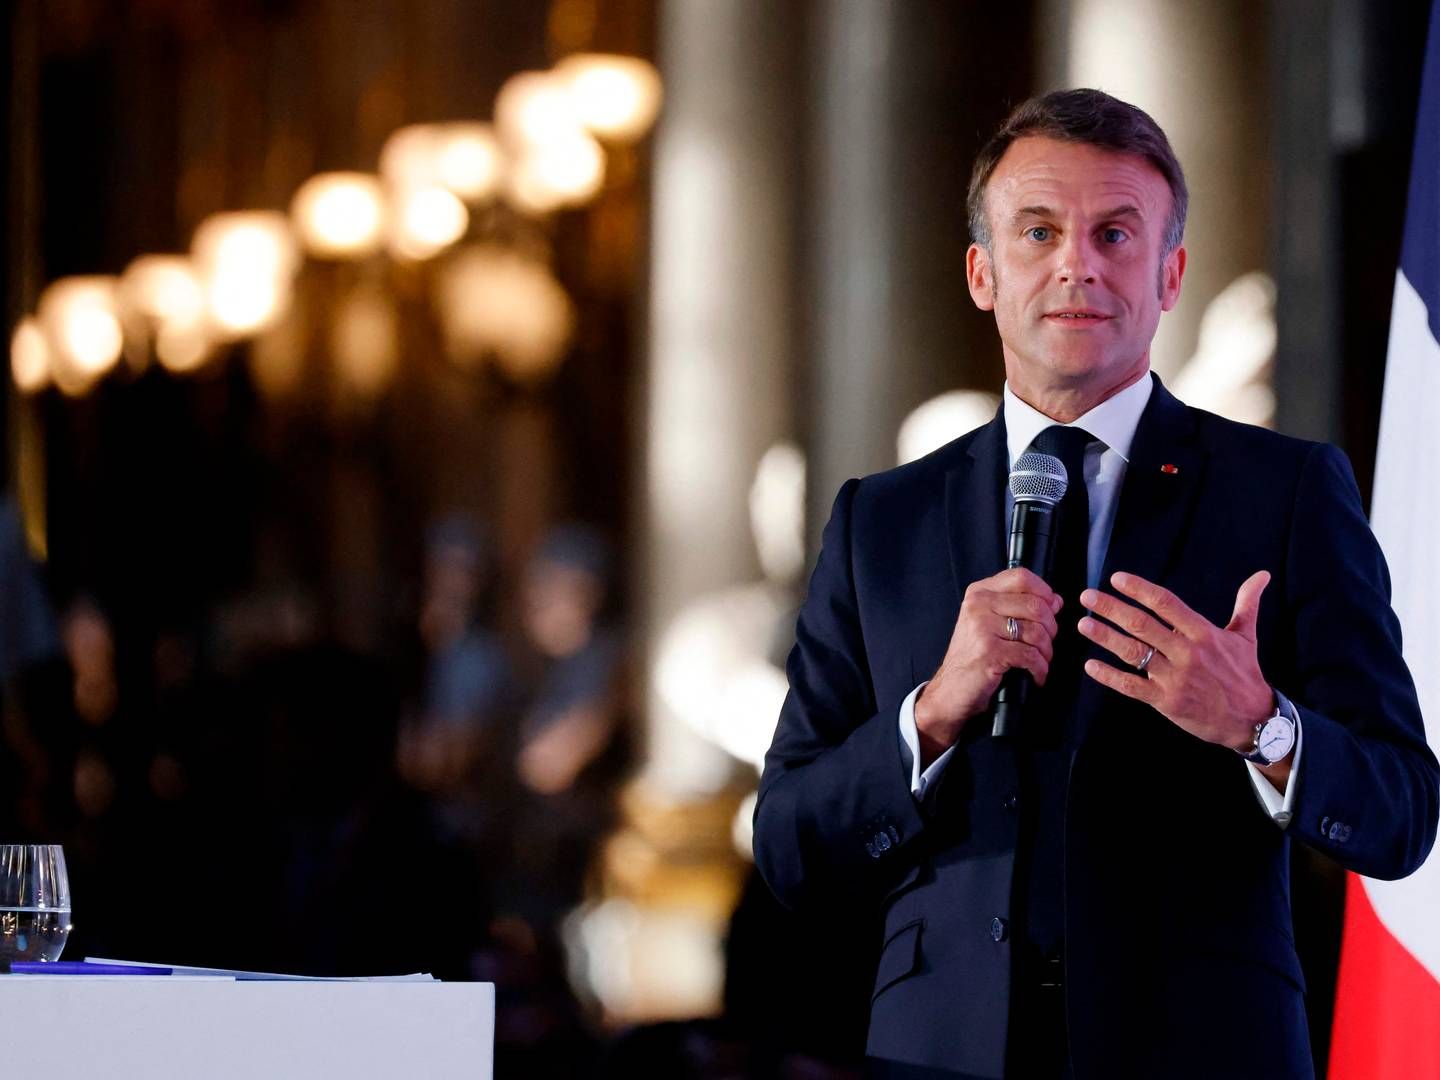 Bedre vilkår skal styrke den samlede velstand i EU, mener Emmanuel Macron. | Foto: Ludovic Marin